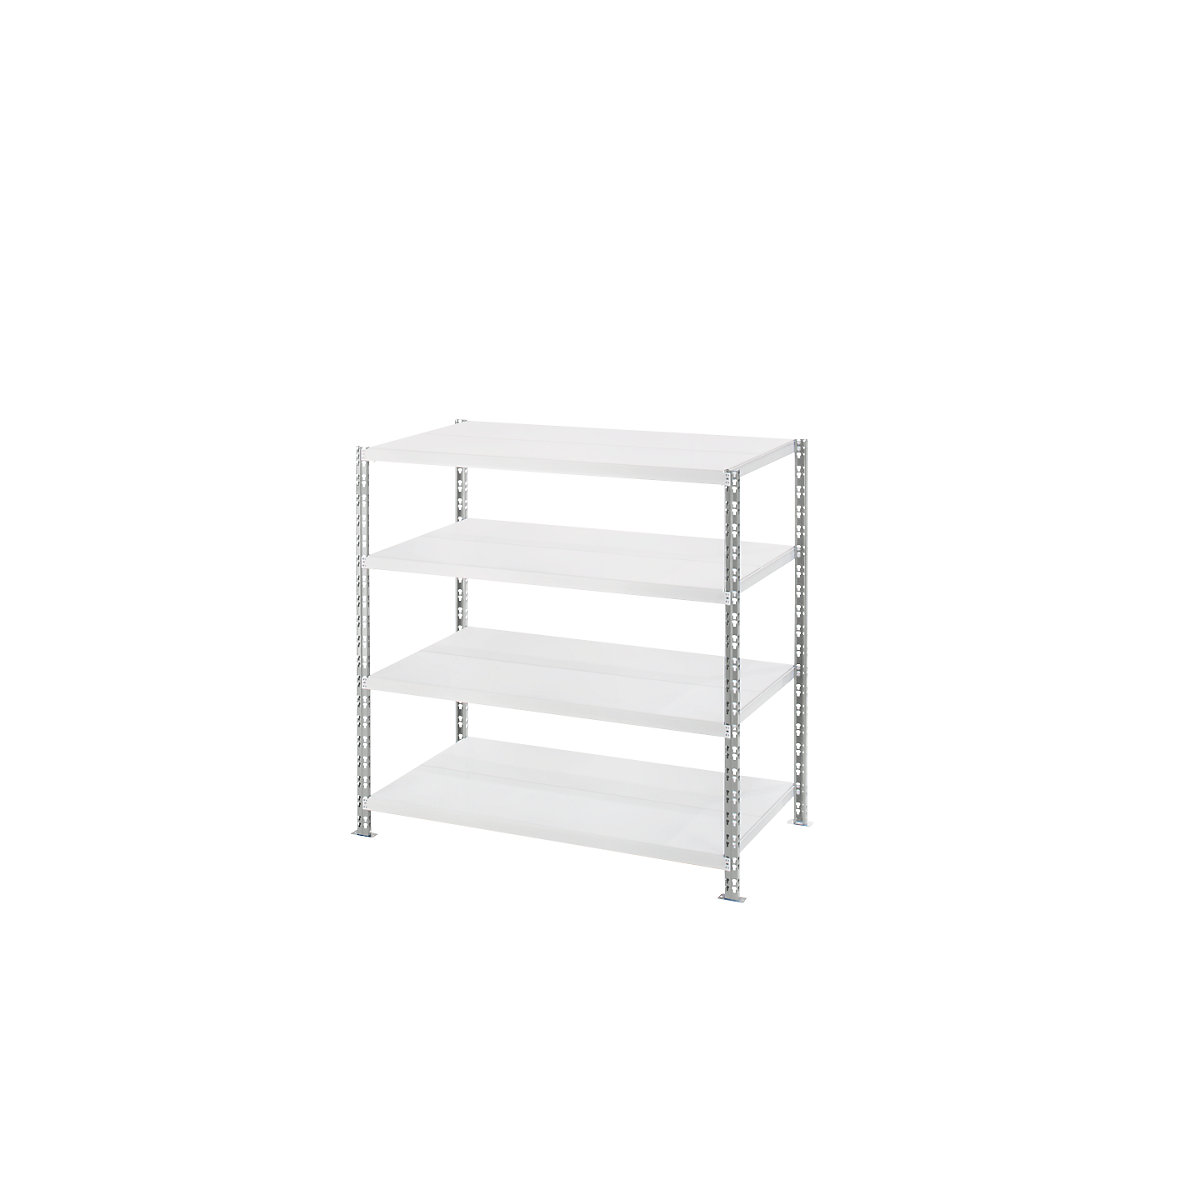 Wide span shelf unit with sheet steel shelves, depth 800 mm, standard shelf unit, HxW 1508 x 1550 mm